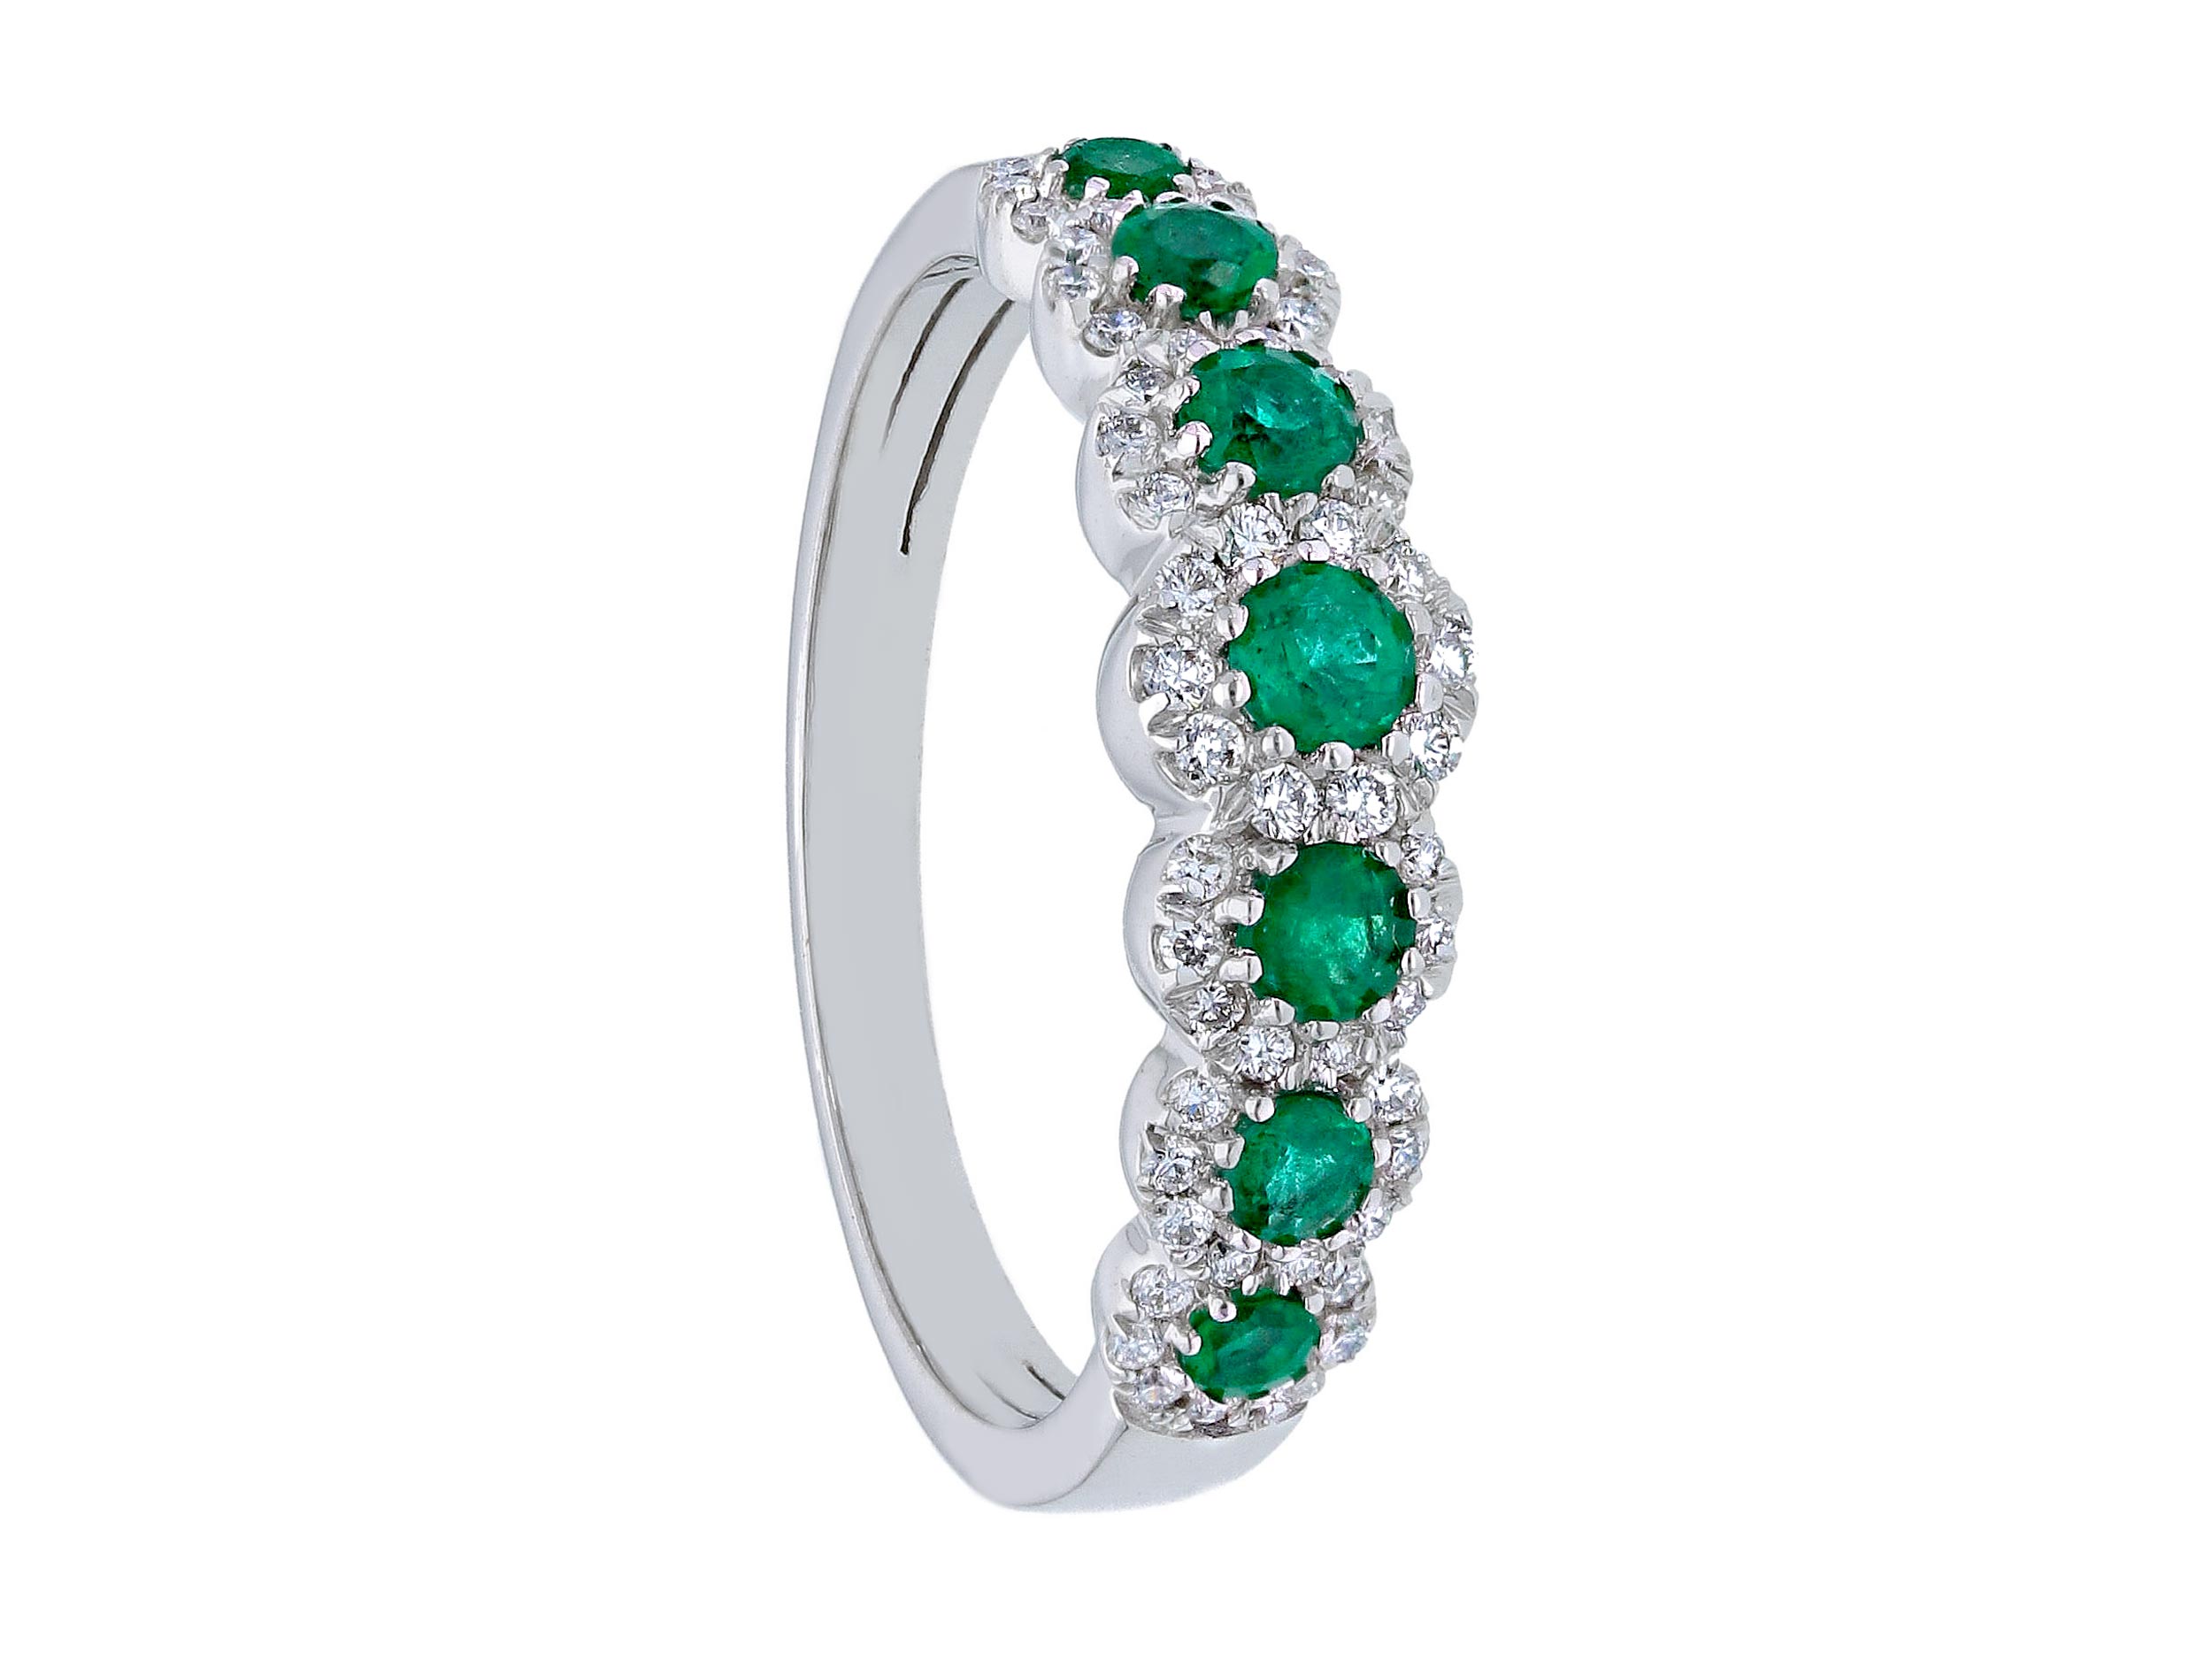 Emerald veretta ring 750% gold and BELLE EPOQUE diamonds Art. 227334